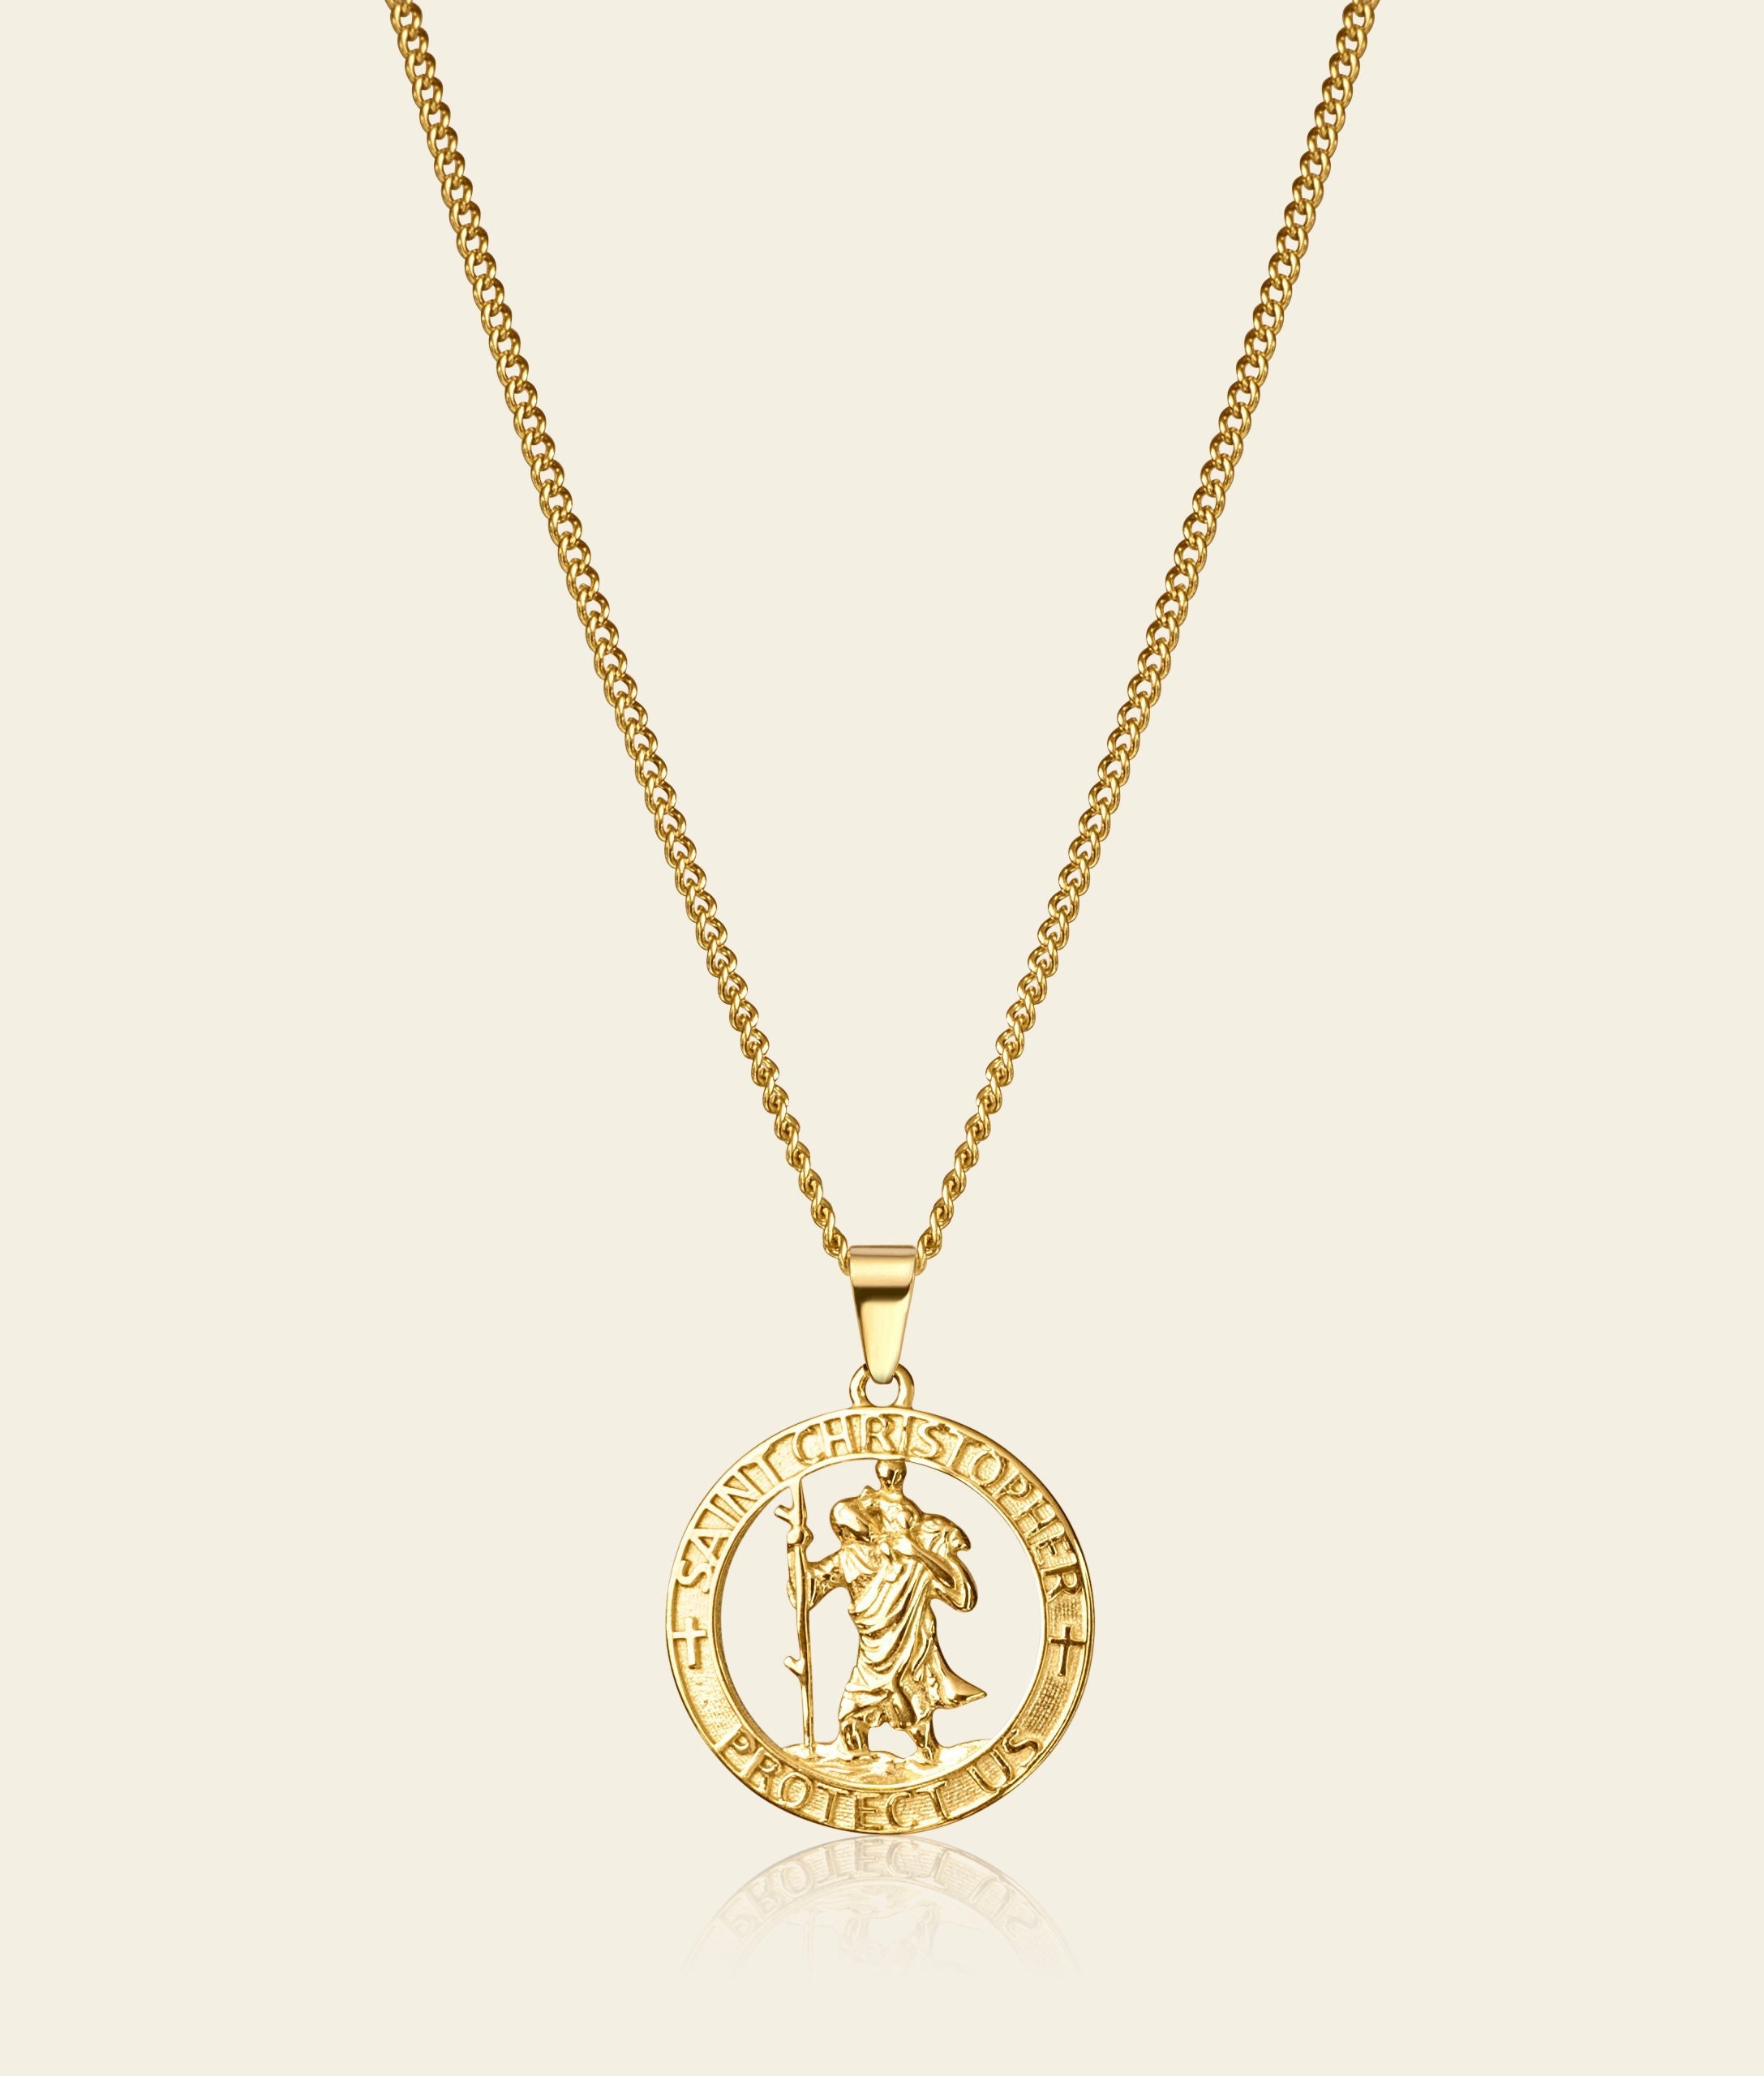 9CT Gold St Saint Christopher Pendant Necklace with 45.7 cm Chain - 18 mm